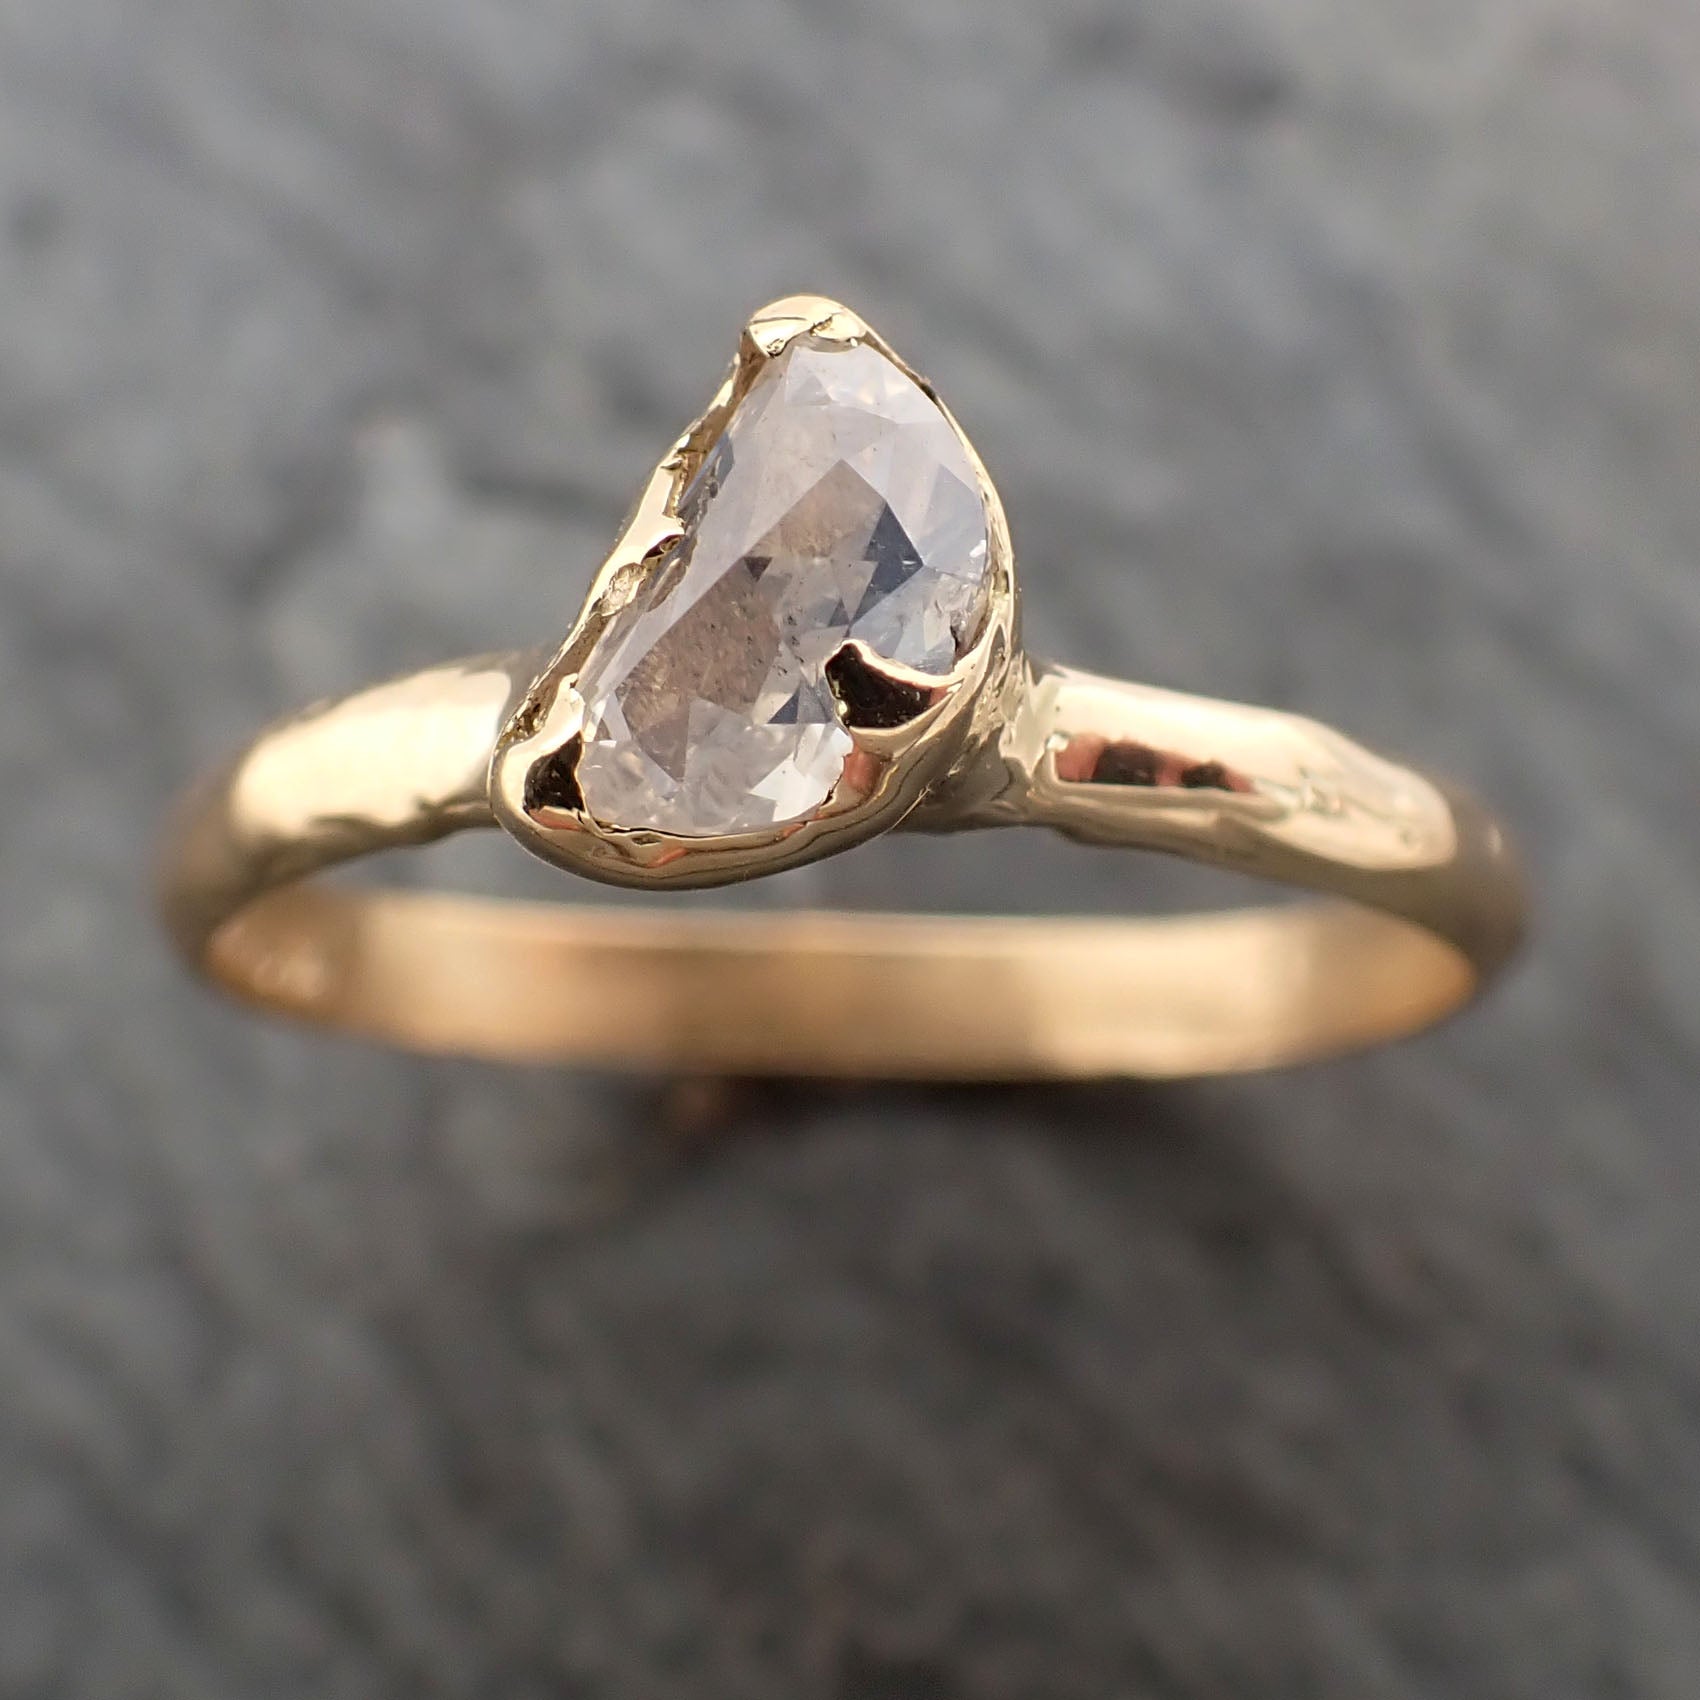 fancy cut moon diamond engagement 18k yellow gold solitaire wedding ring byangeline 2340 Alternative Engagement